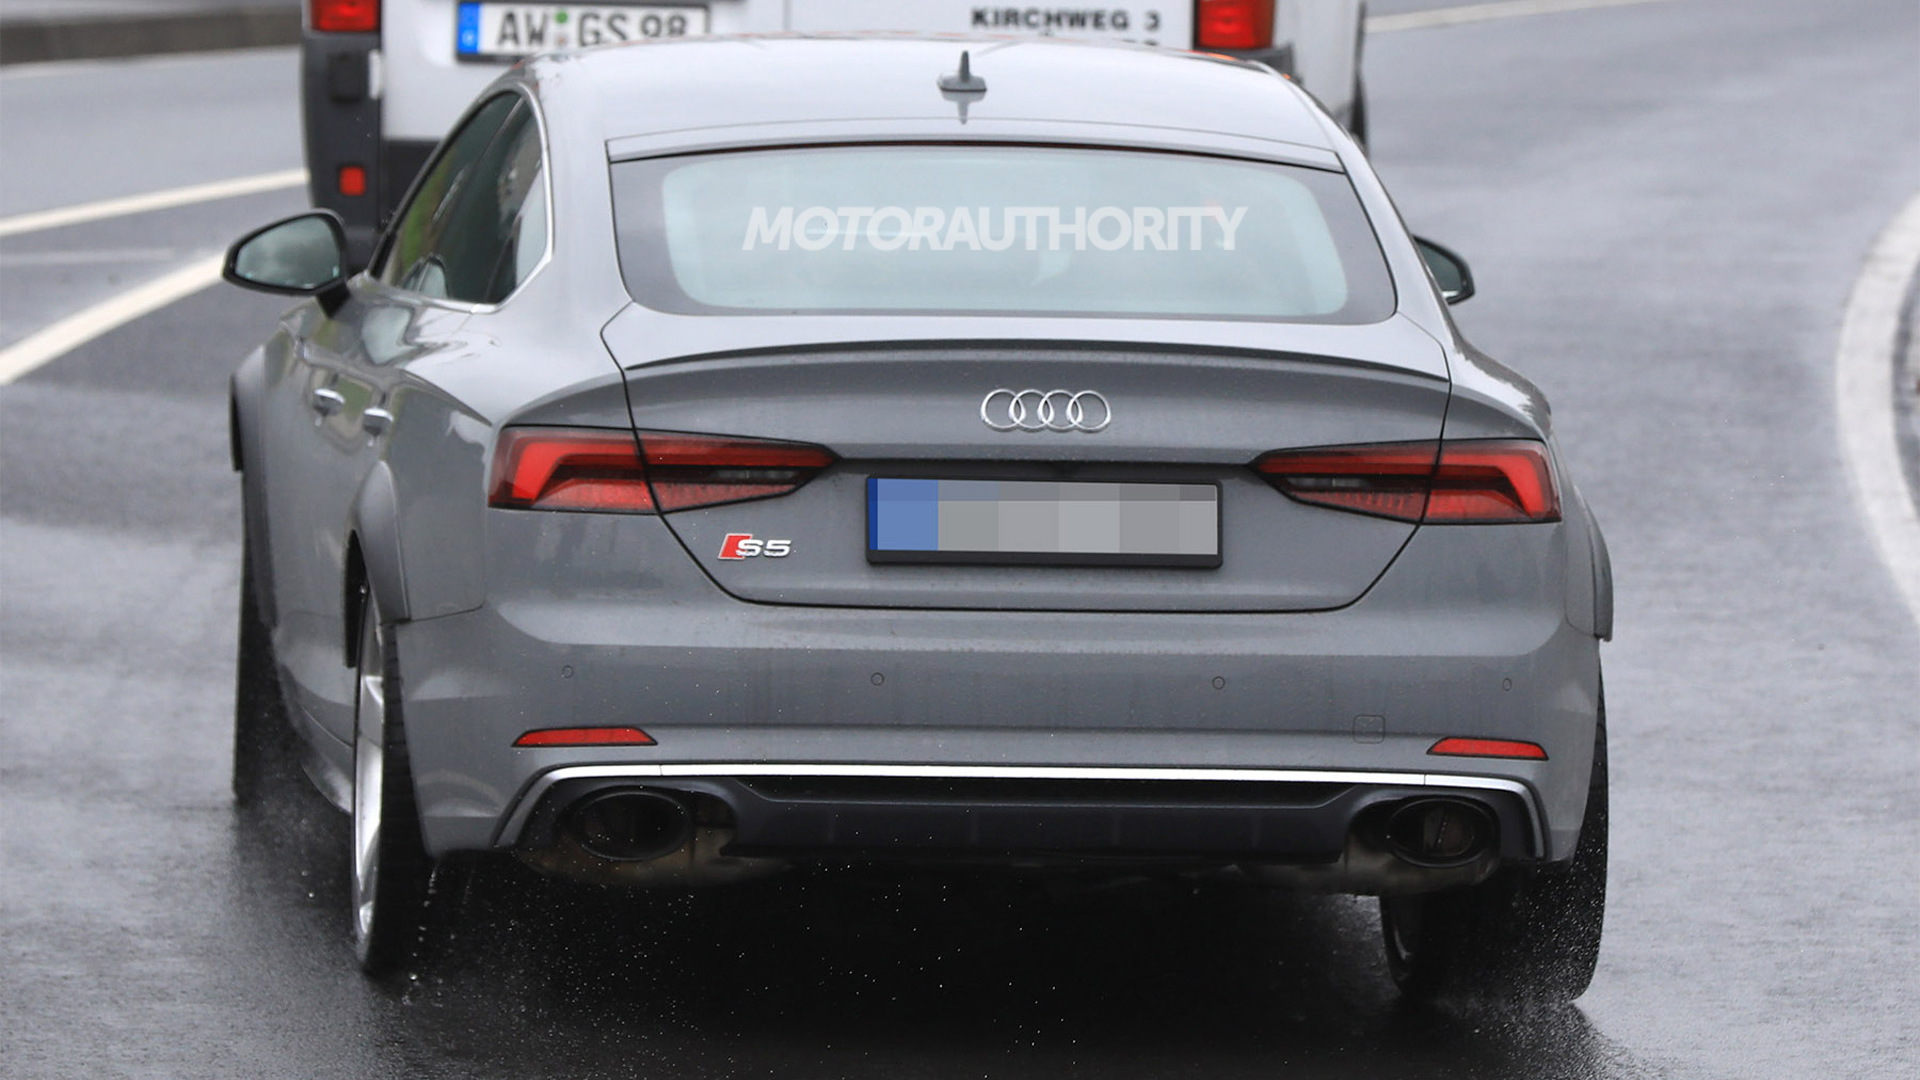 2019 Audi RS 5 Sportback test mule spy shots - Image via S. Baldauf/SB-Medien